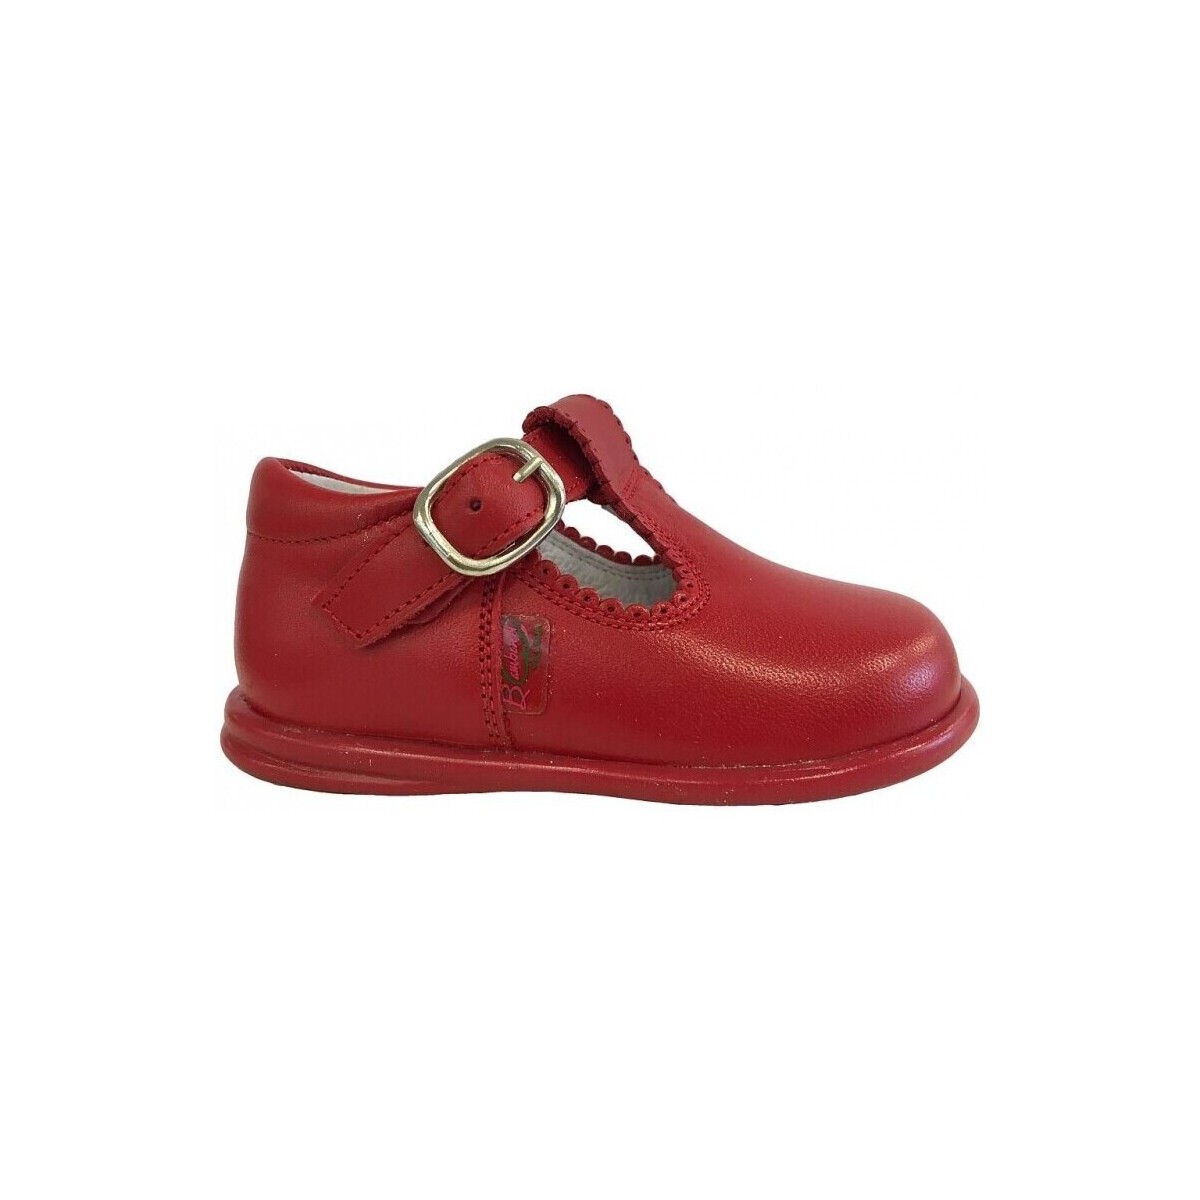 Zapatos Sandalias Bambineli 13058-18 Rojo